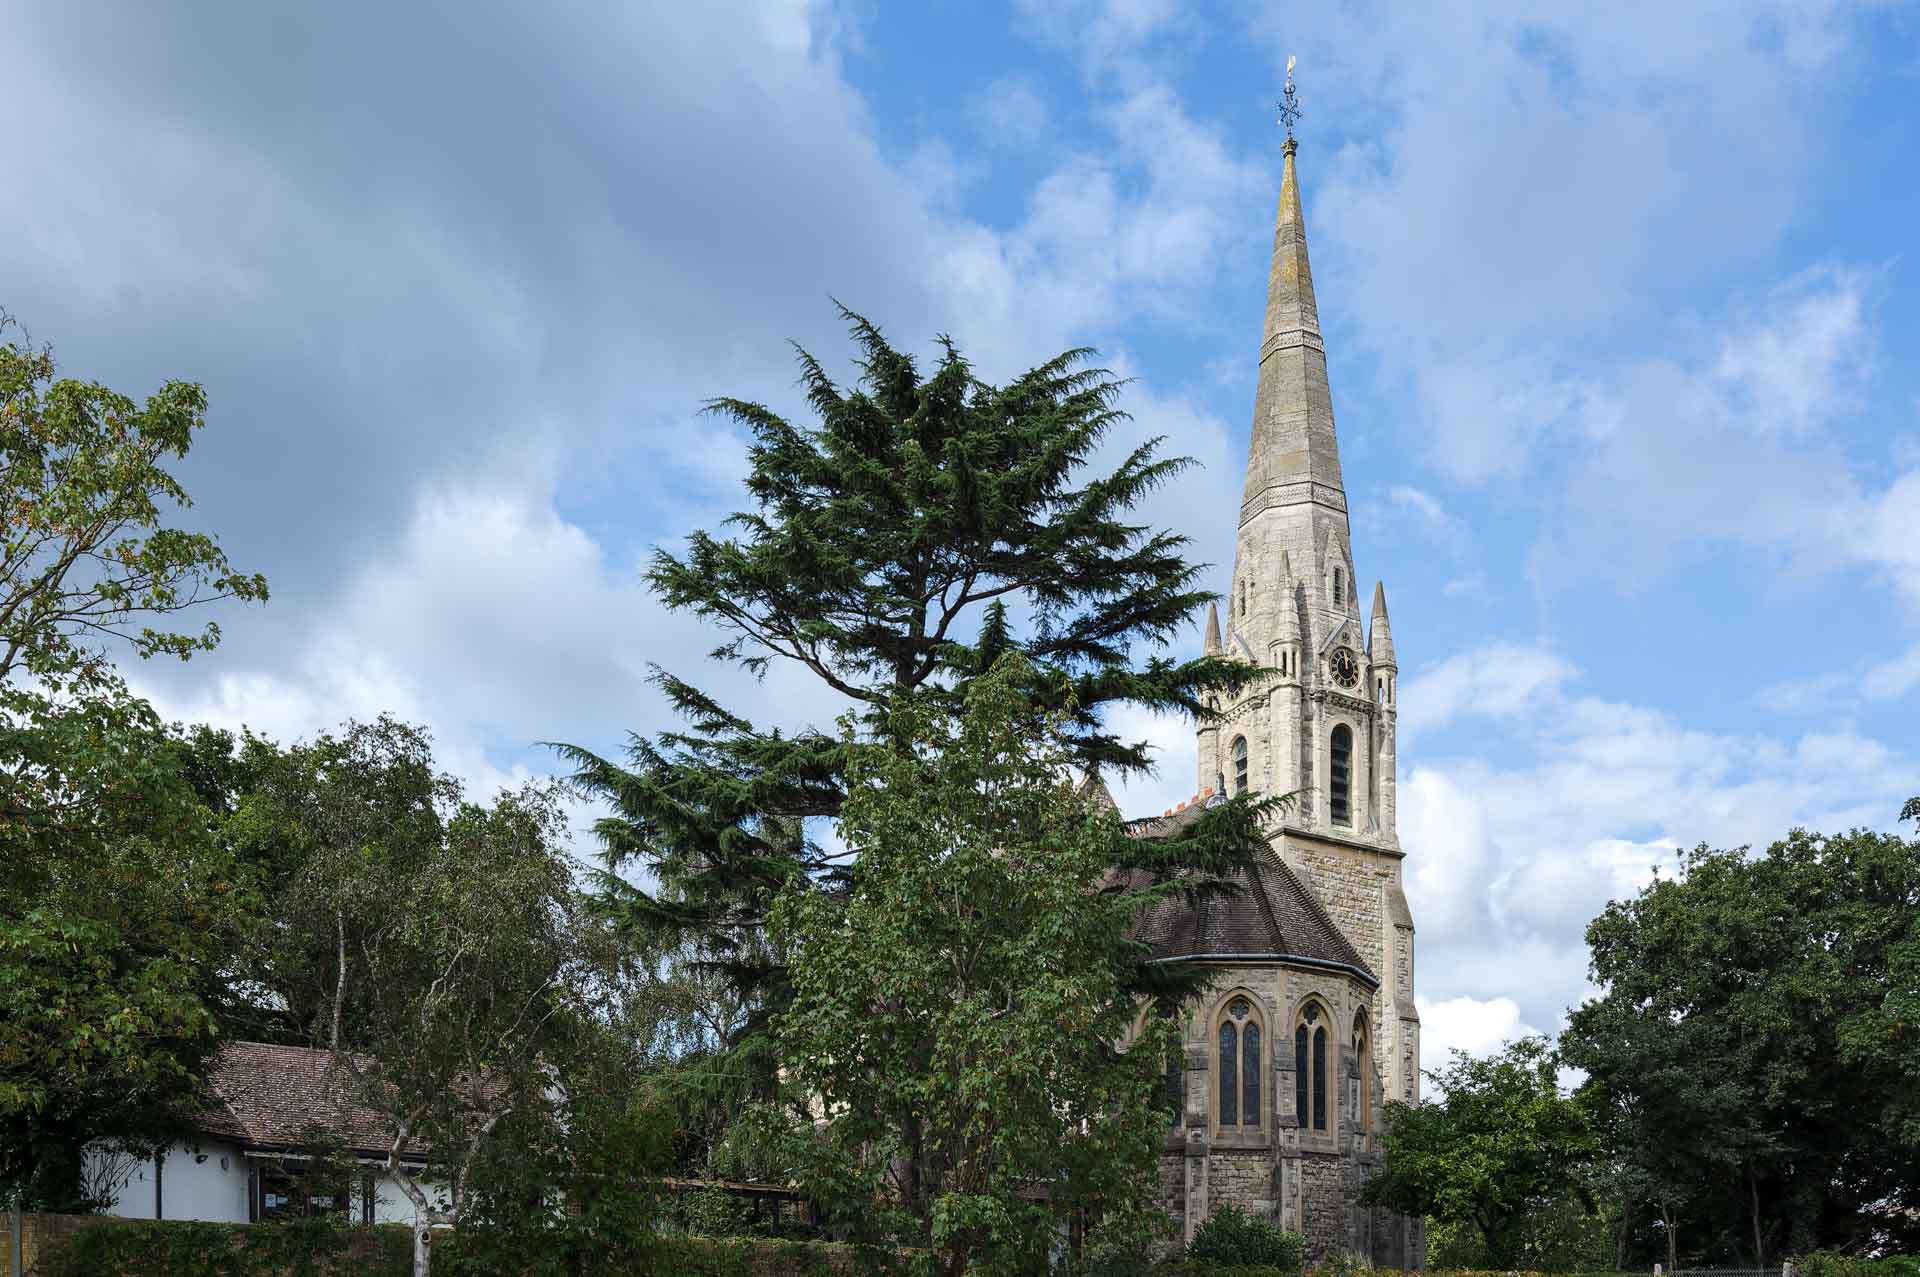 View of St John The Evangelist Church, Bexley, Kent taken by Bexley Wedding Photographer